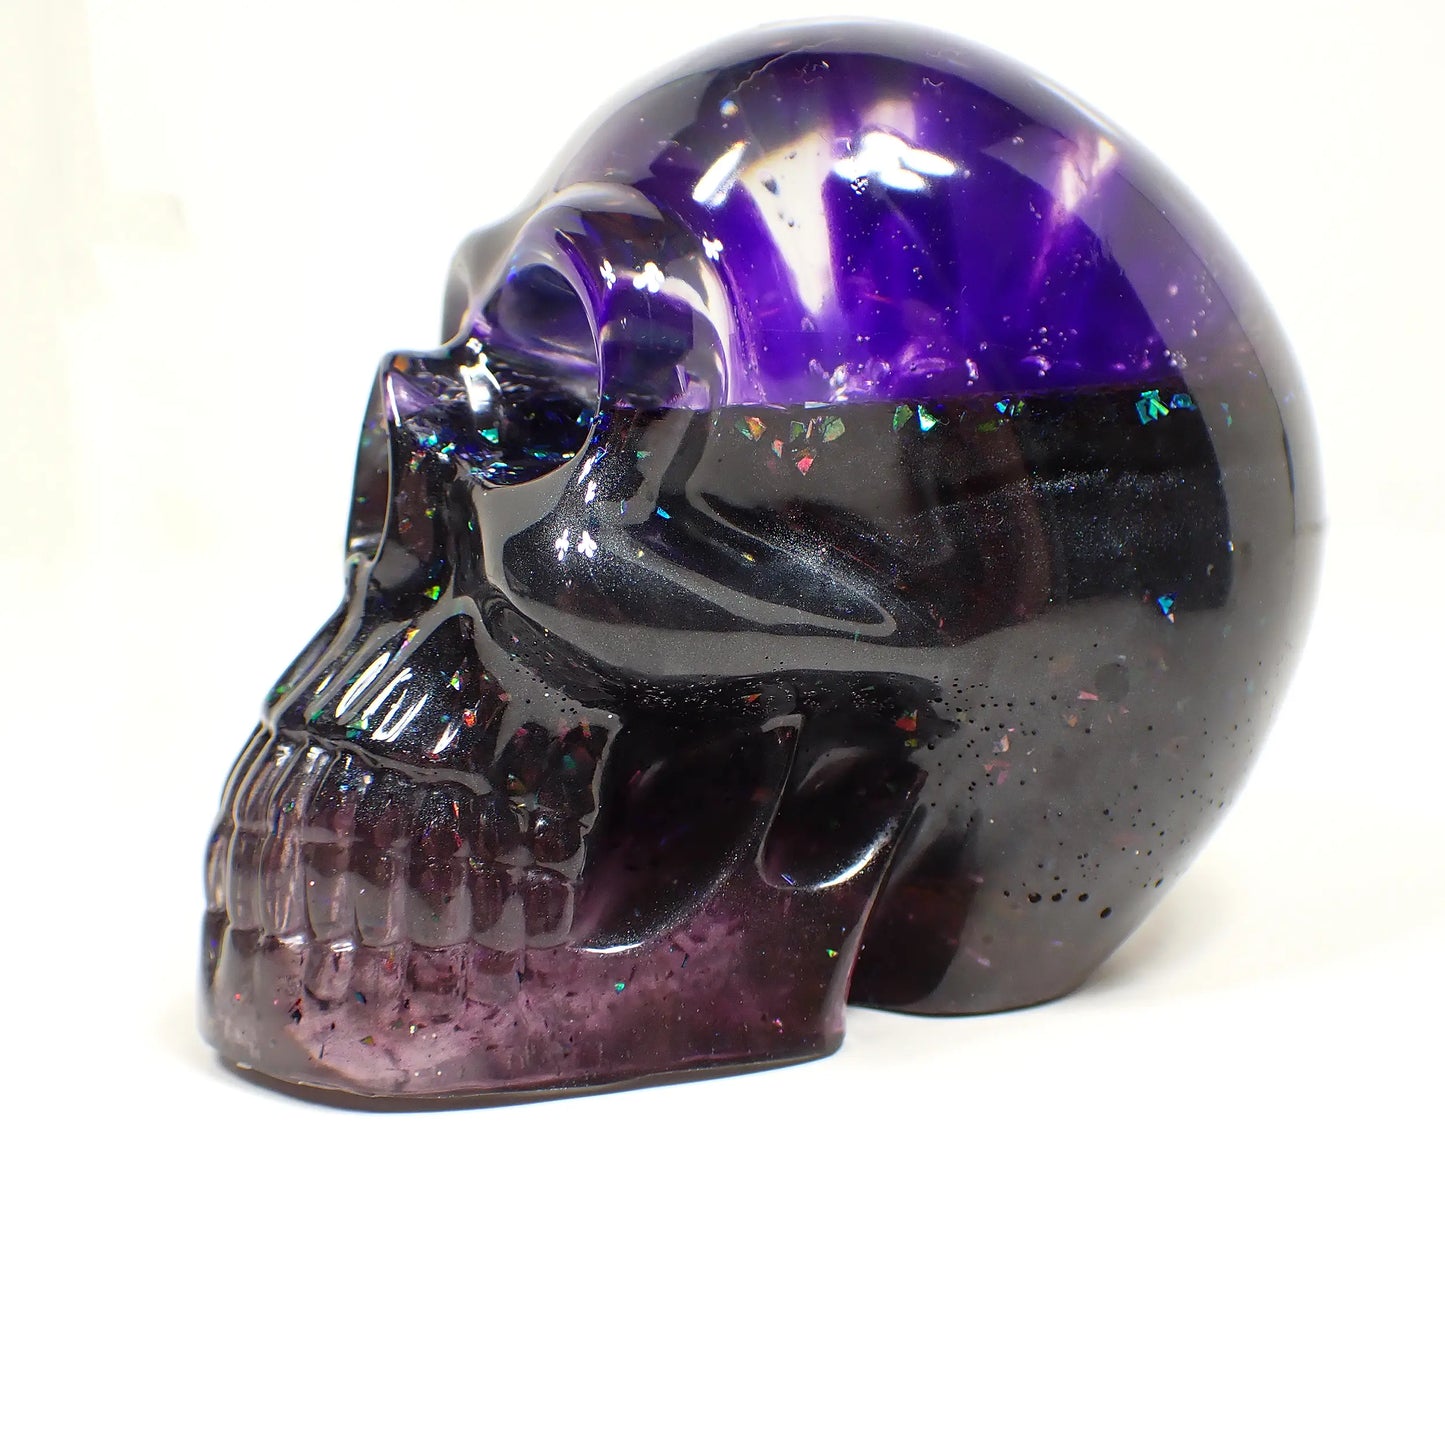 Handmade Pearly Dark Purple and Gray Resin Skull with Iridescent Glitter, Goth Halloween Decor